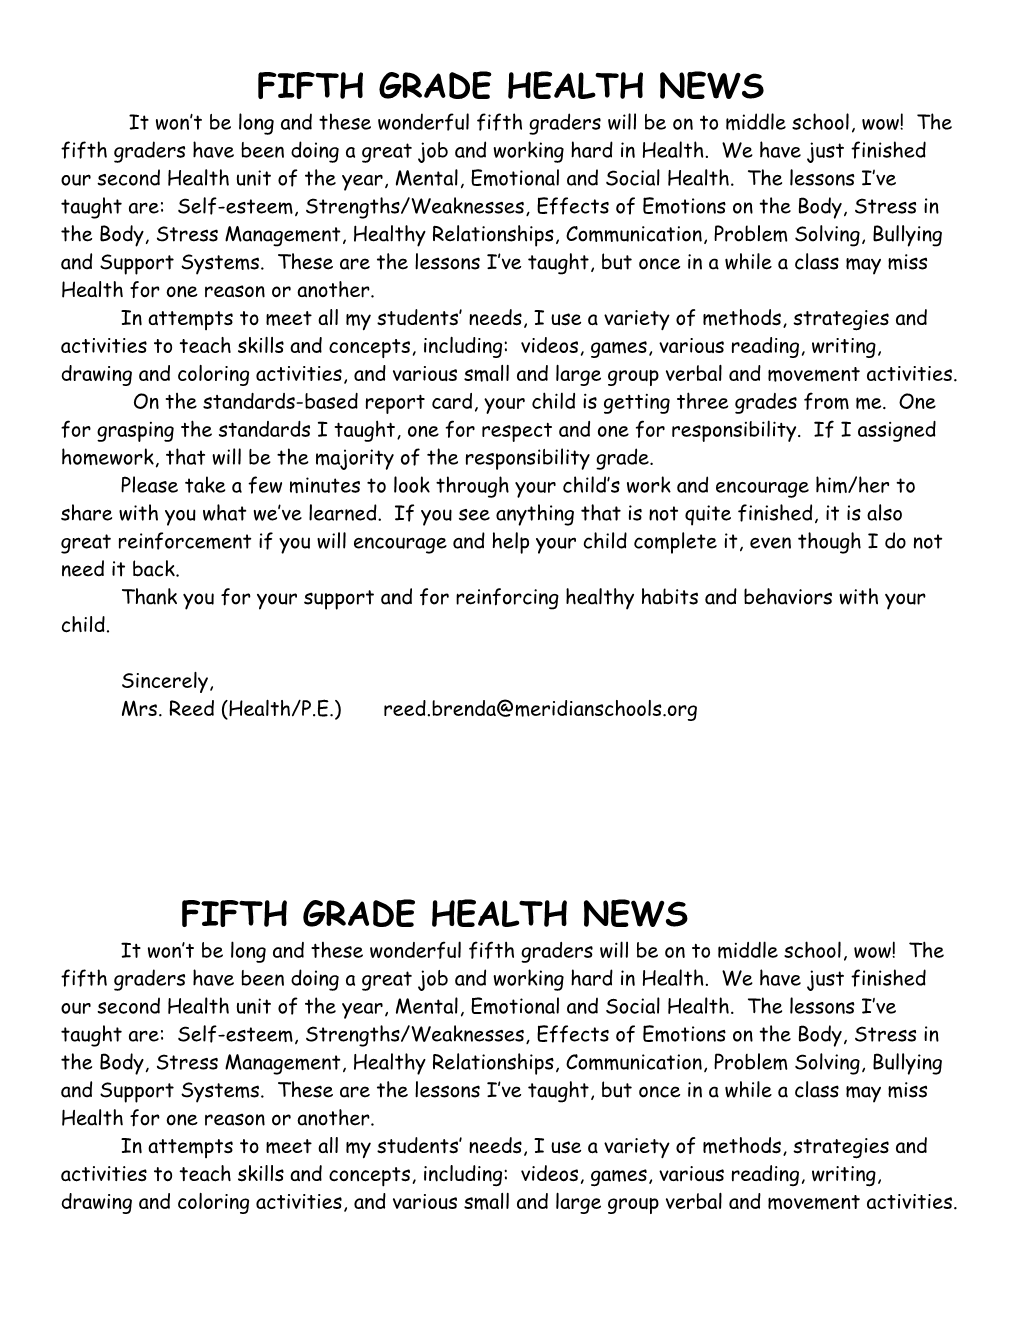 Third Grade Health News